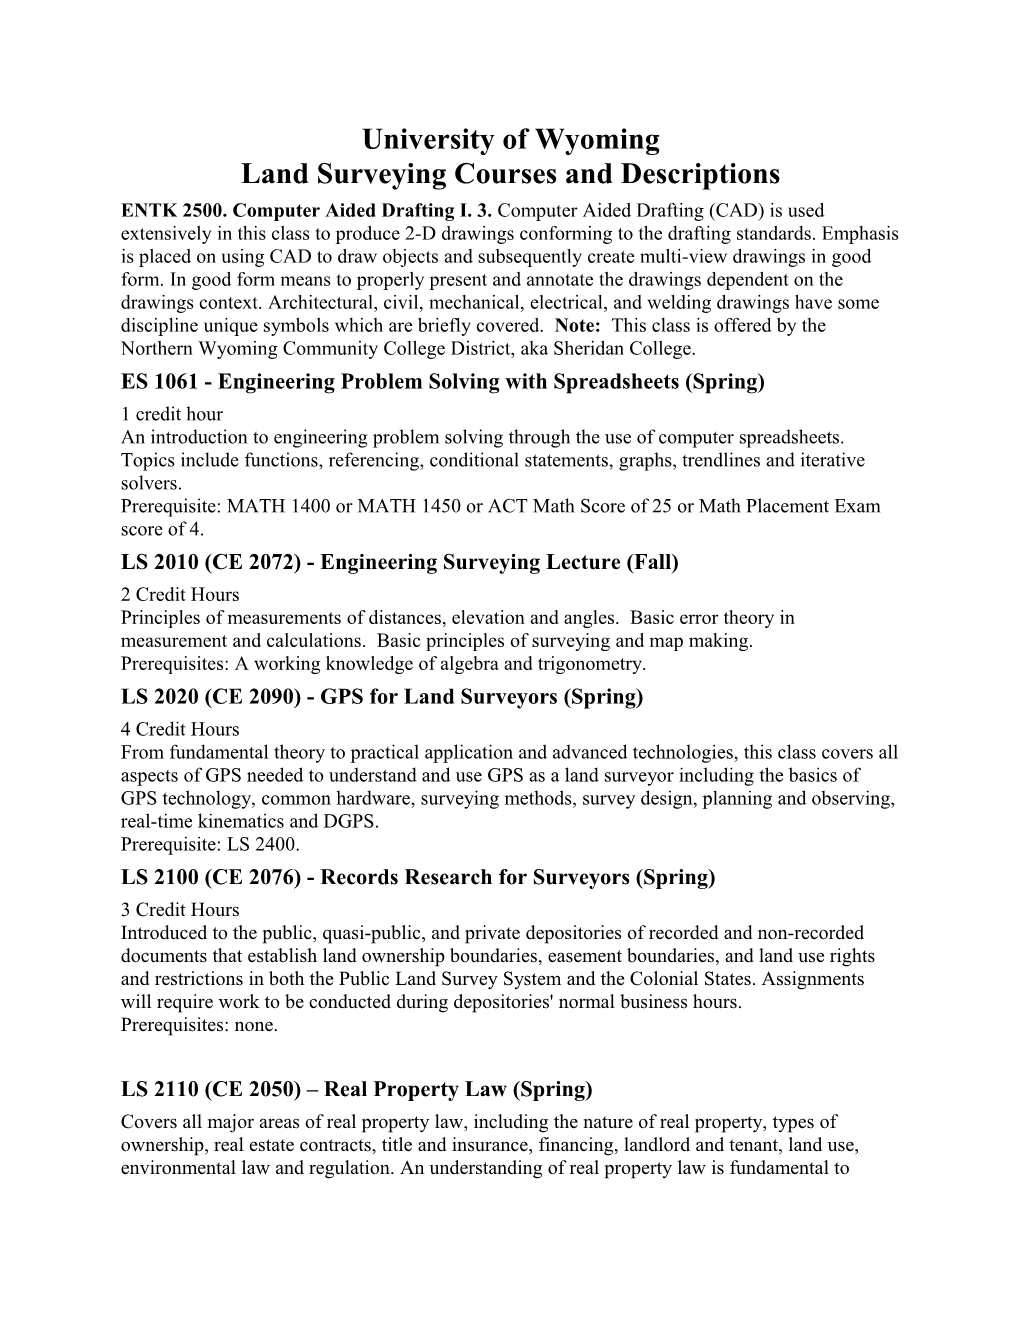 Land Surveying Courses and Descriptions